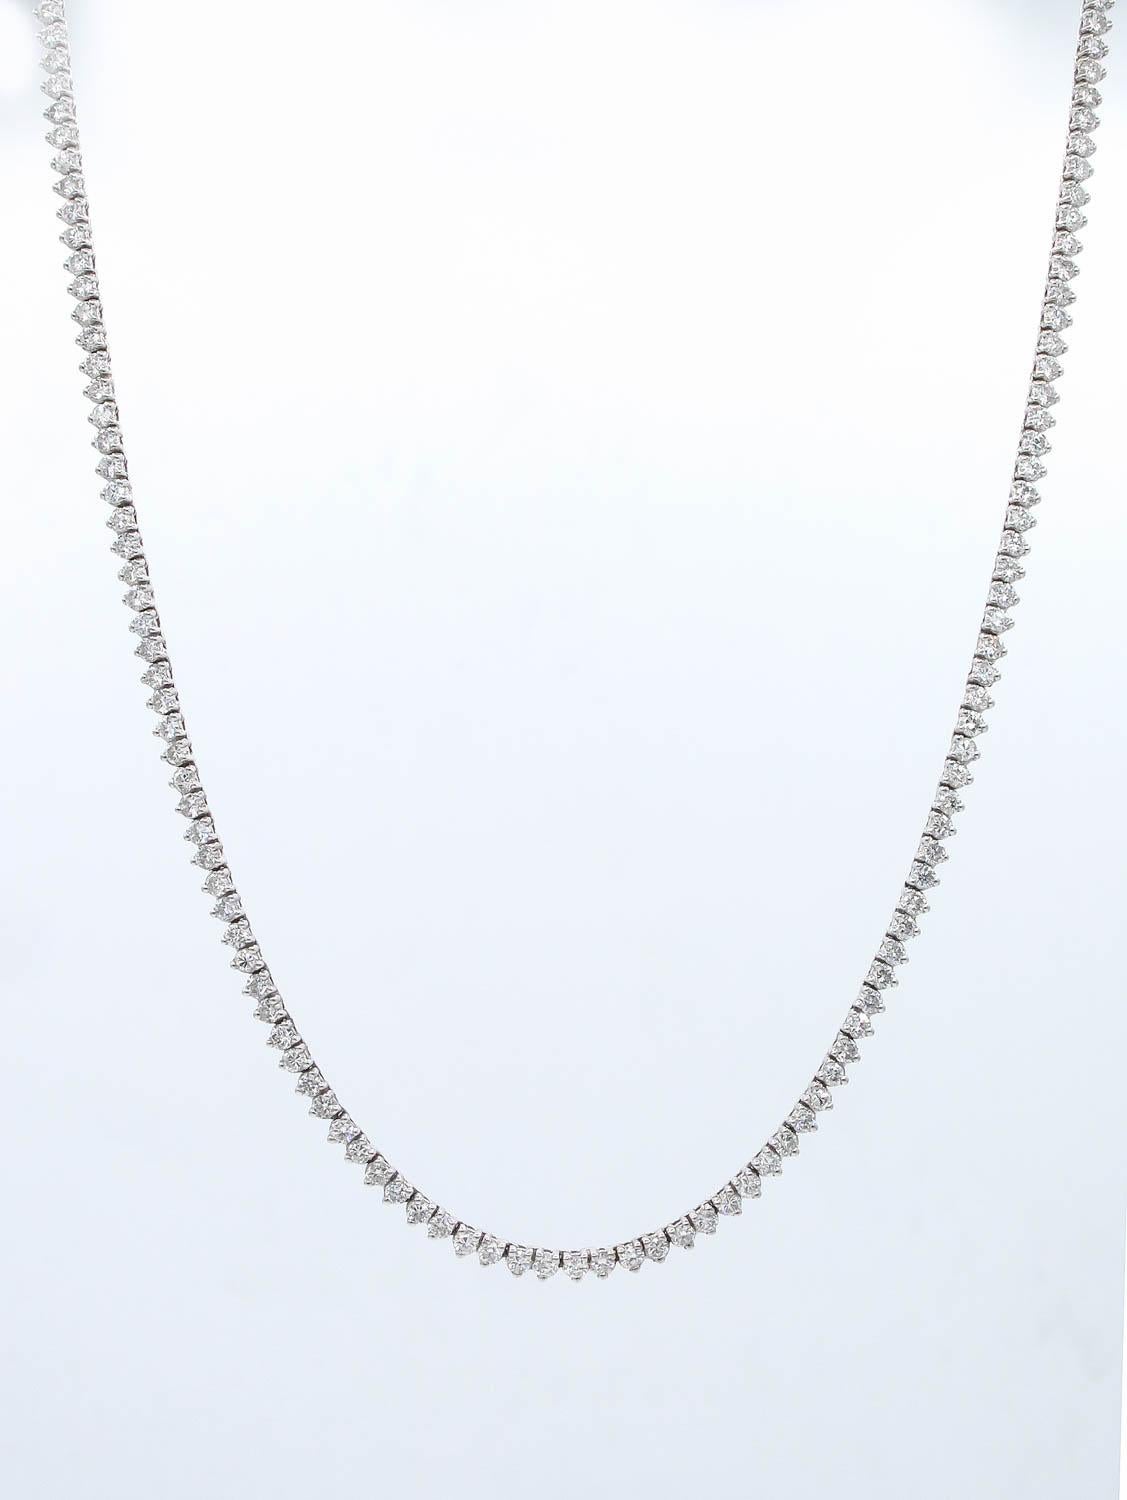 7.50 Carat Round Diamond Tennis Necklace in White Gold 3